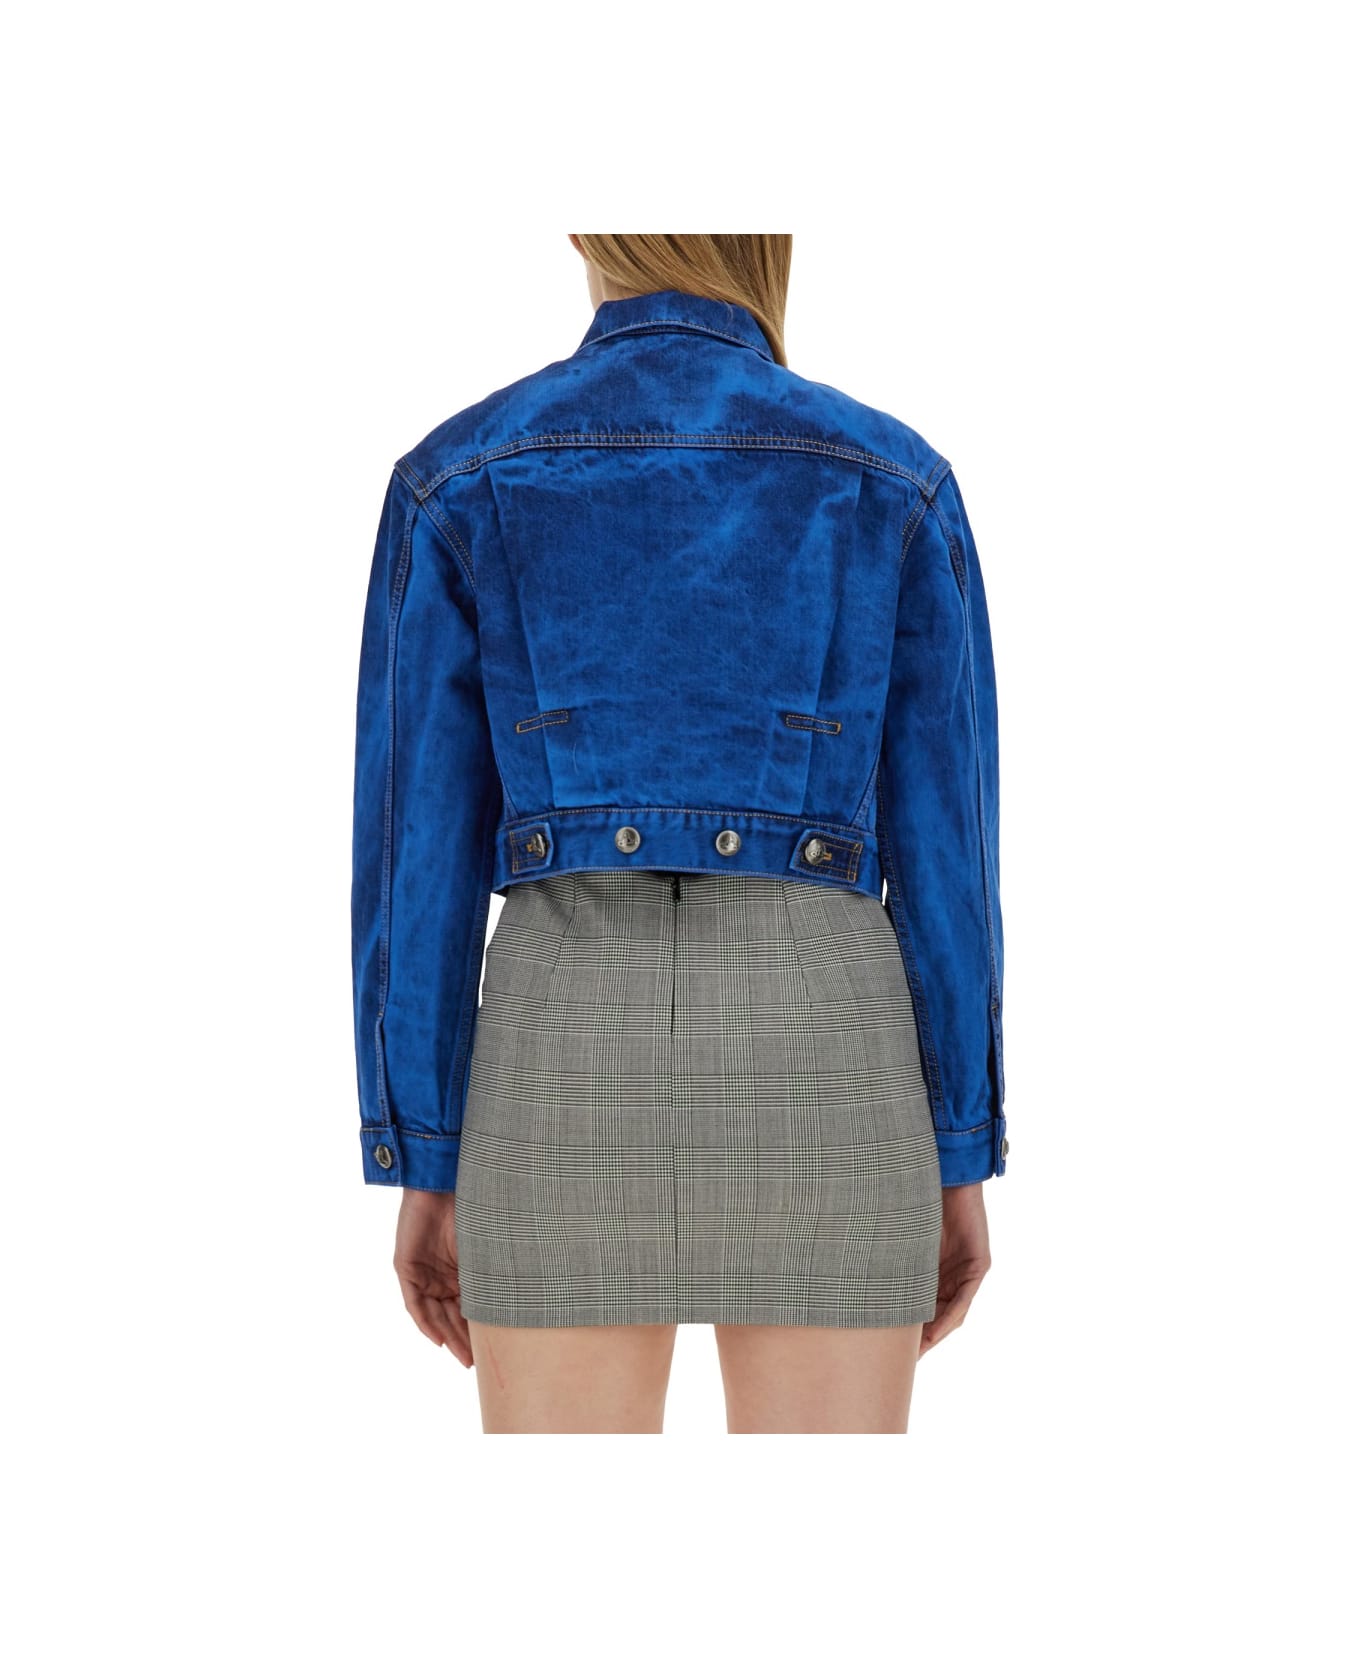 Vivienne Westwood Jacket "marlene" - BLUE